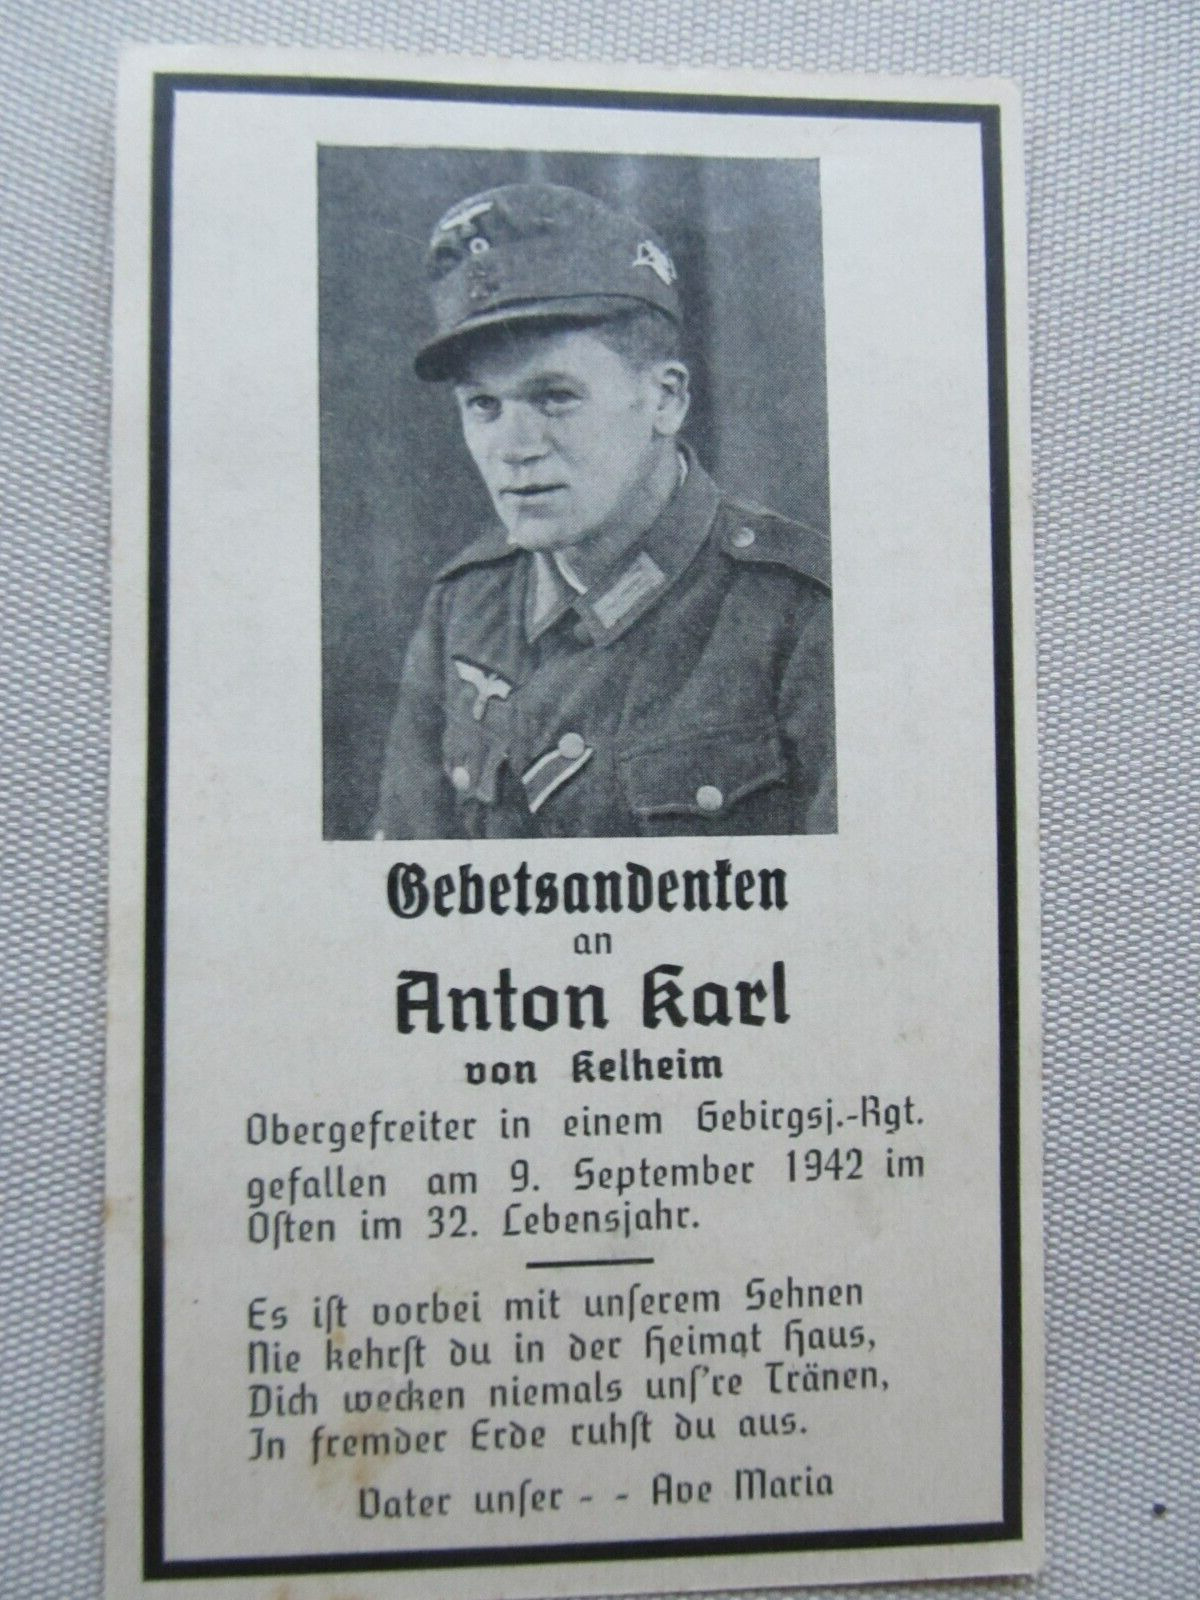 Rare WWII German Death Card, Mountain Uniform in Photo, NICE EIDELWEISS INSIGNIA